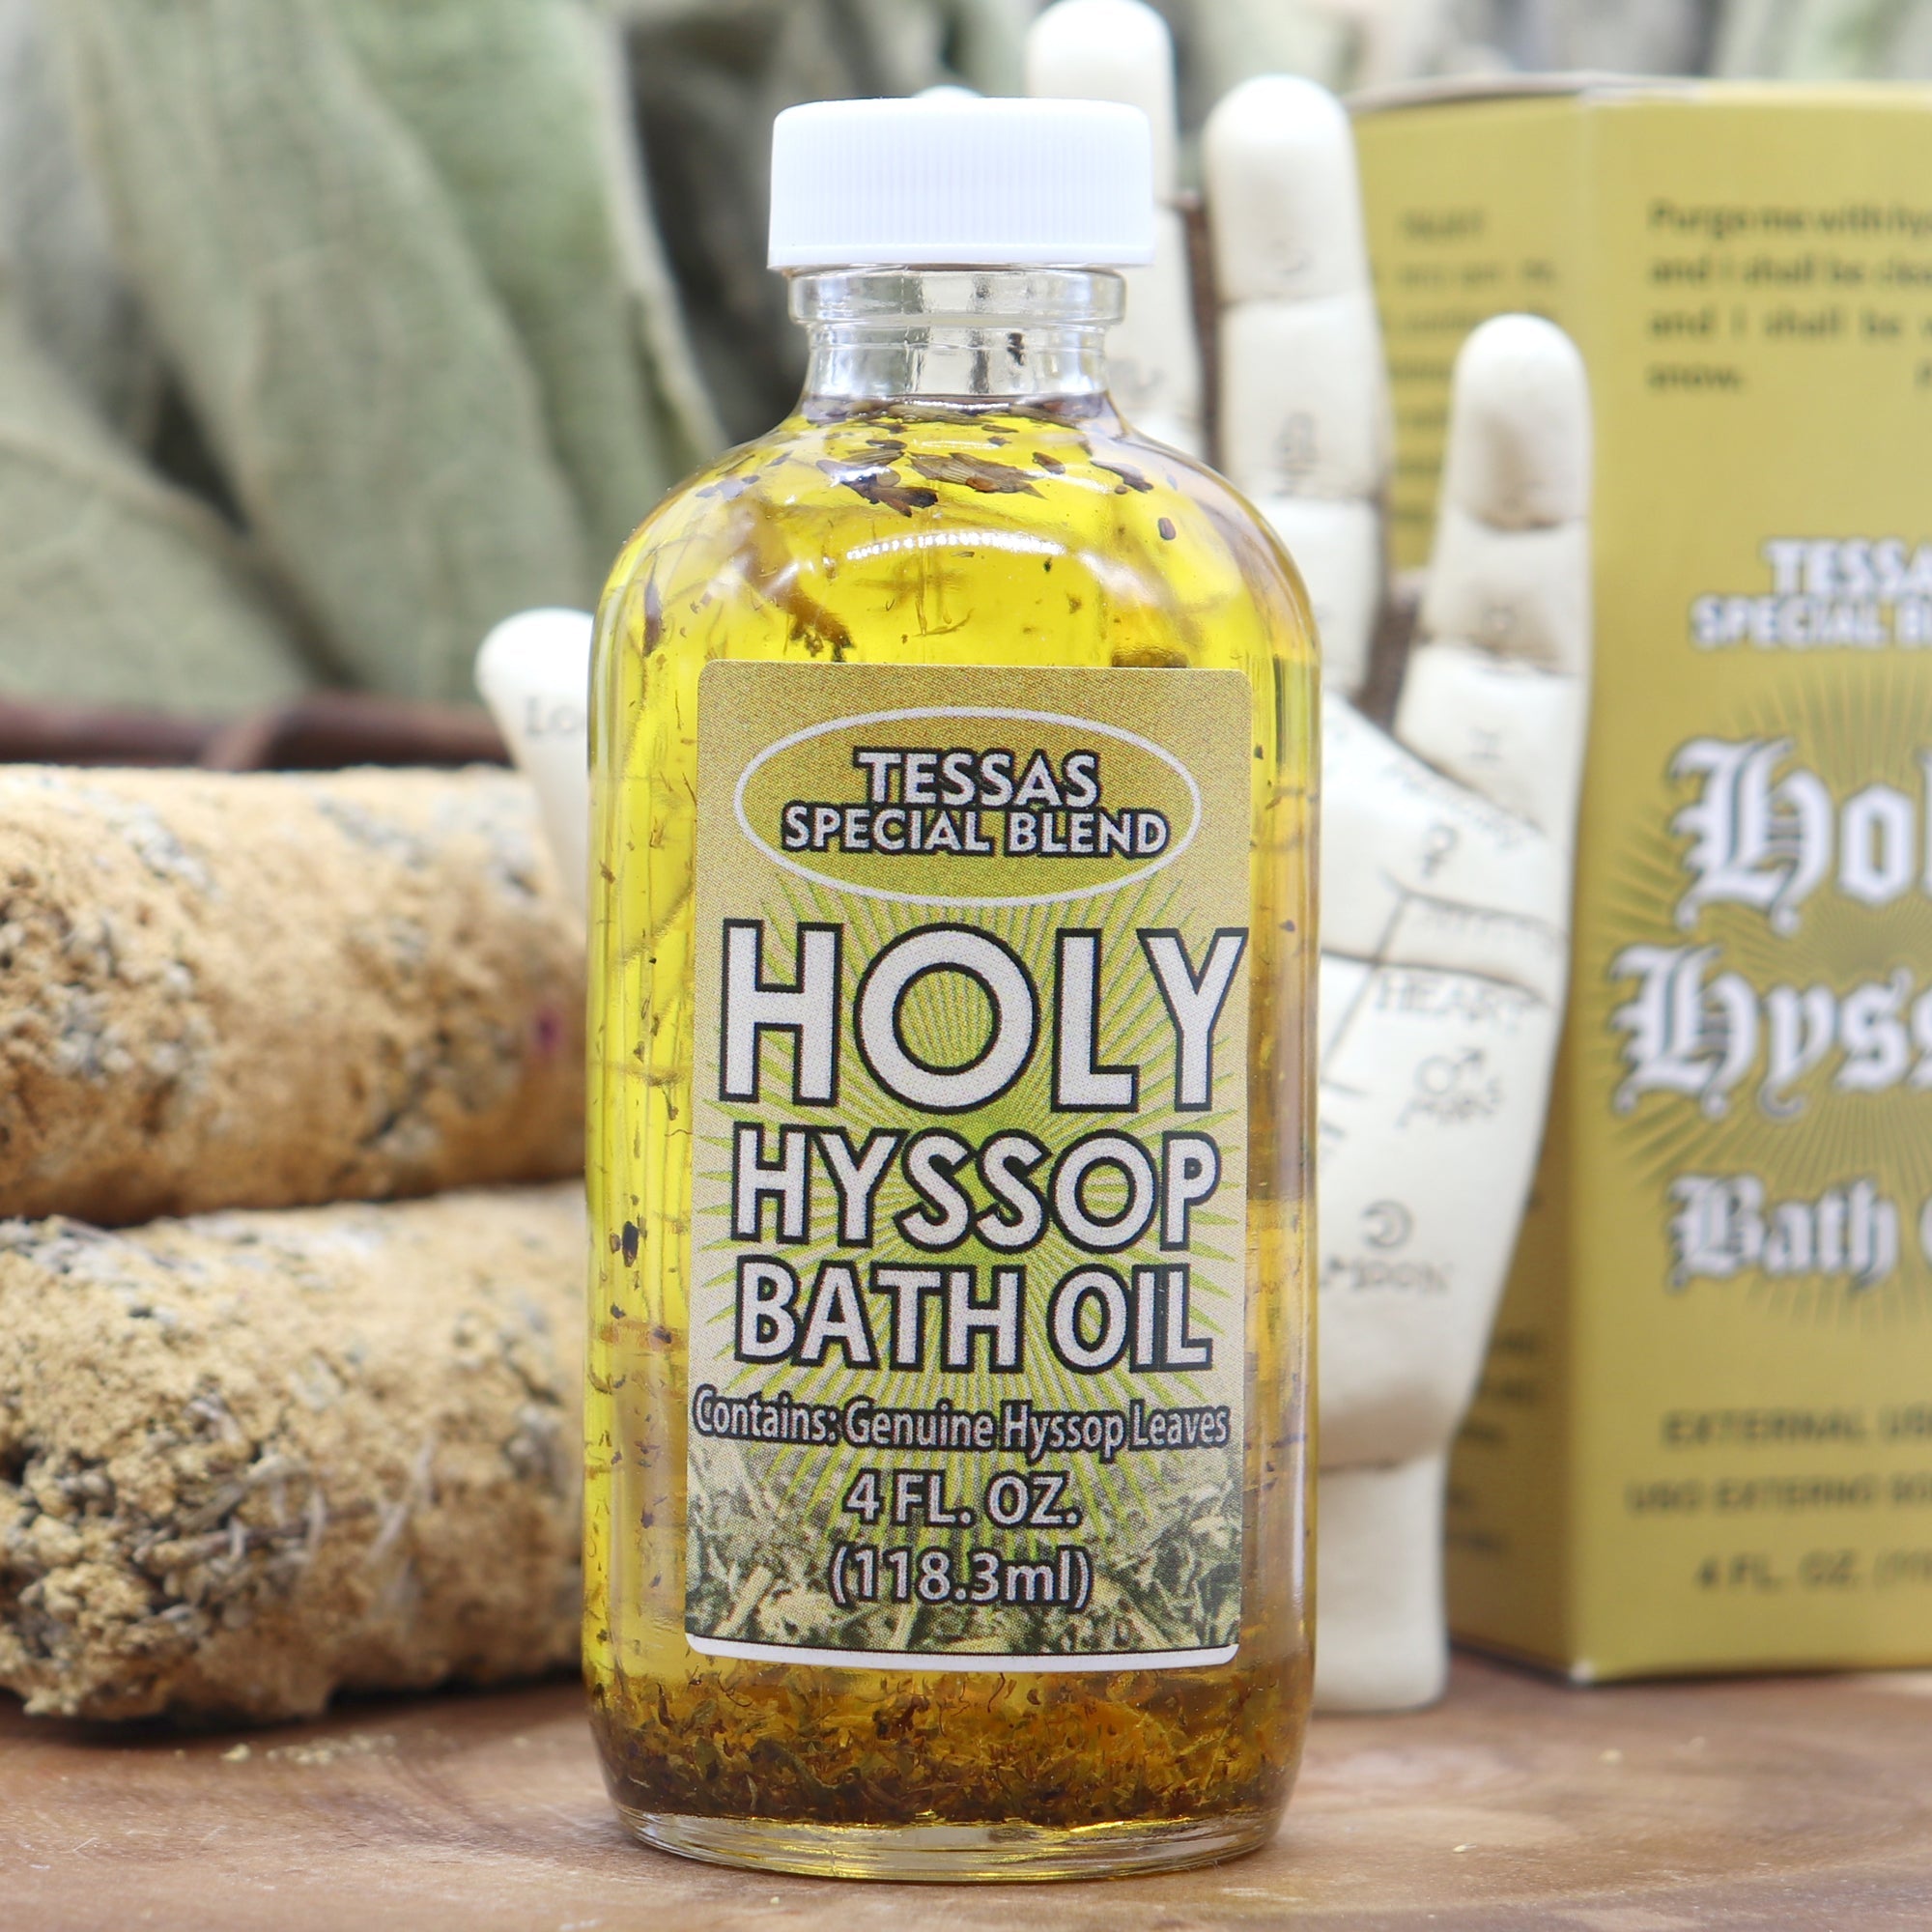 Holy Hyssop Bath Oil - 13 Moons